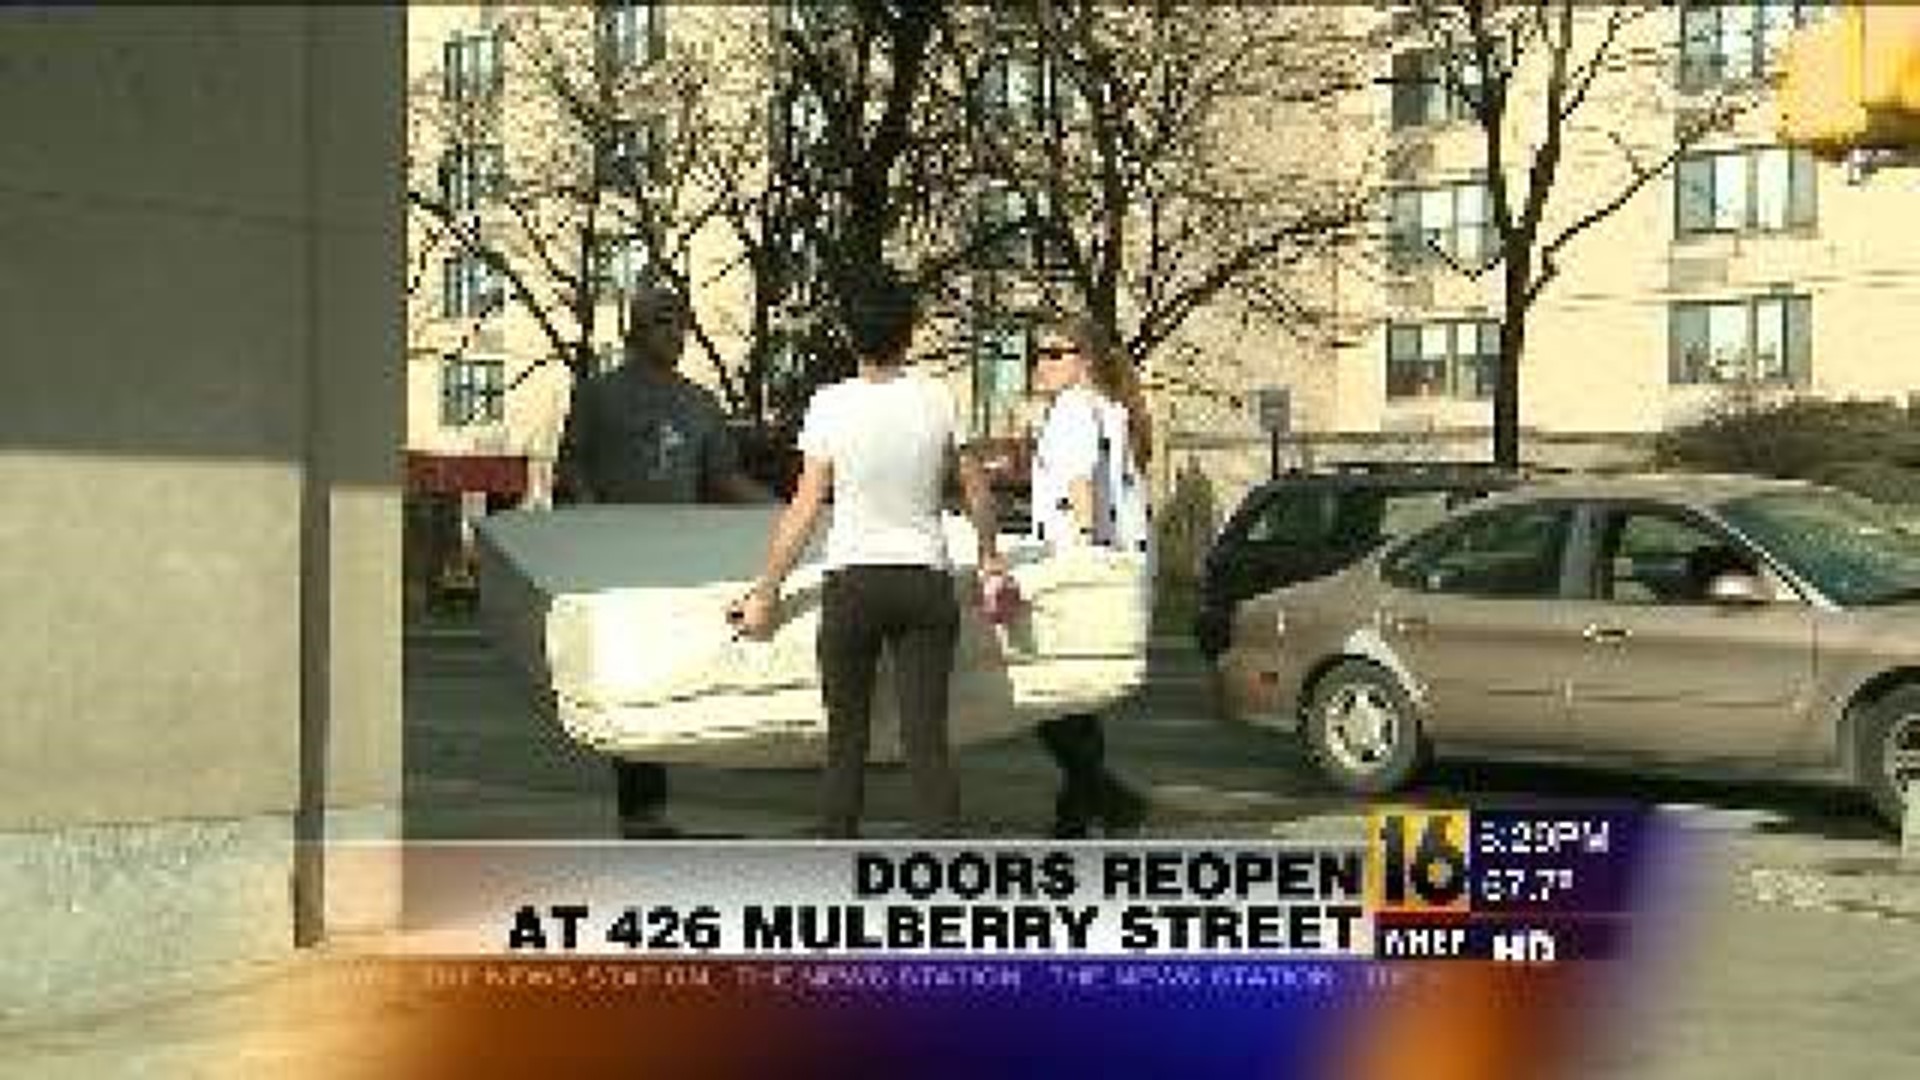 Doors Re-open at 426 Mulberry Street